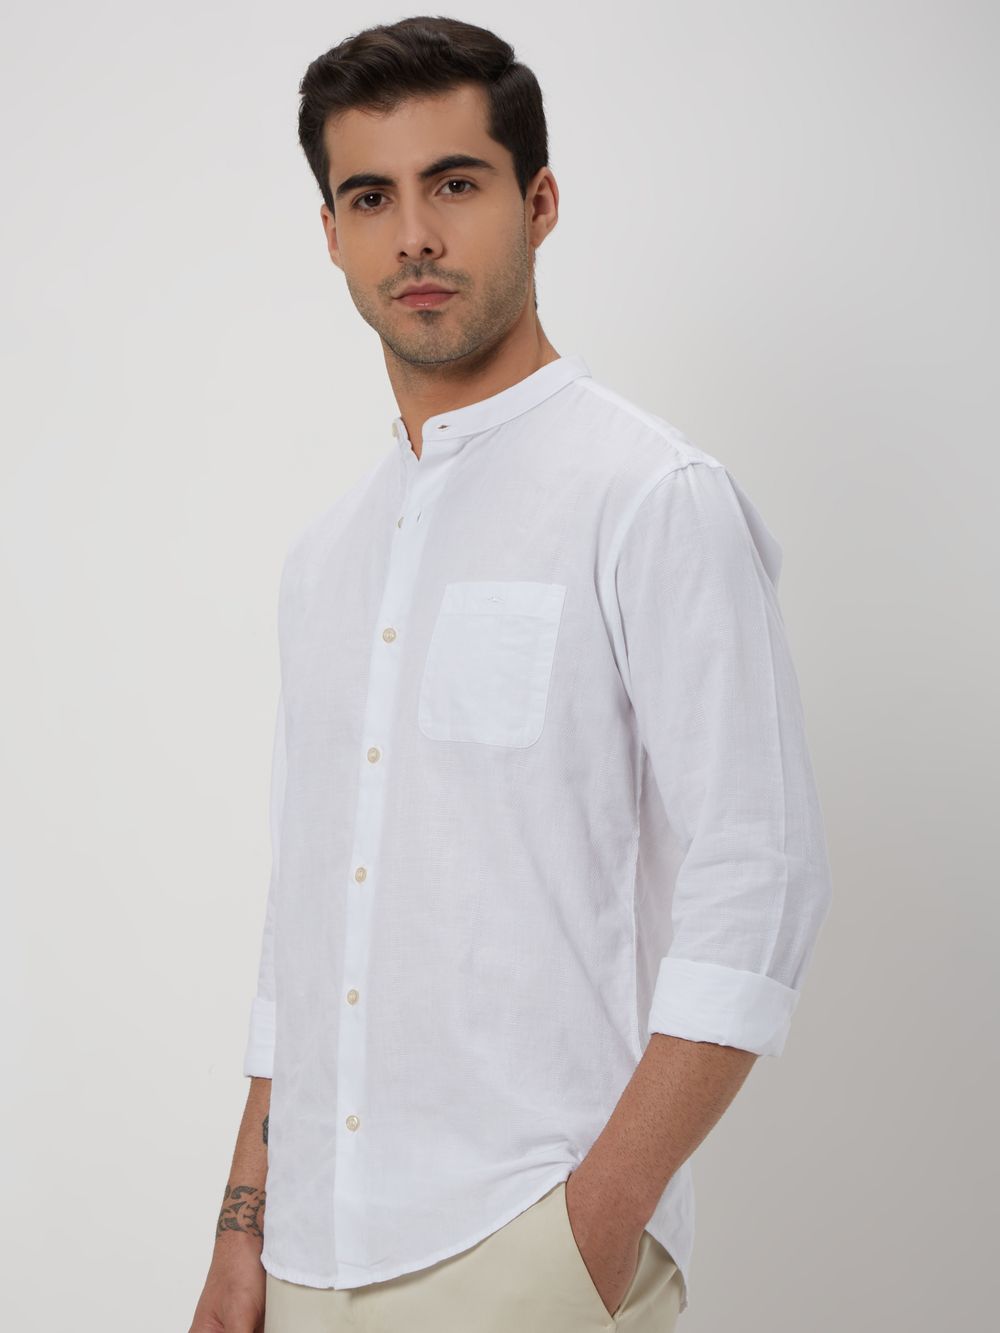 White Textured Plain Slim Fit Casual Shirt